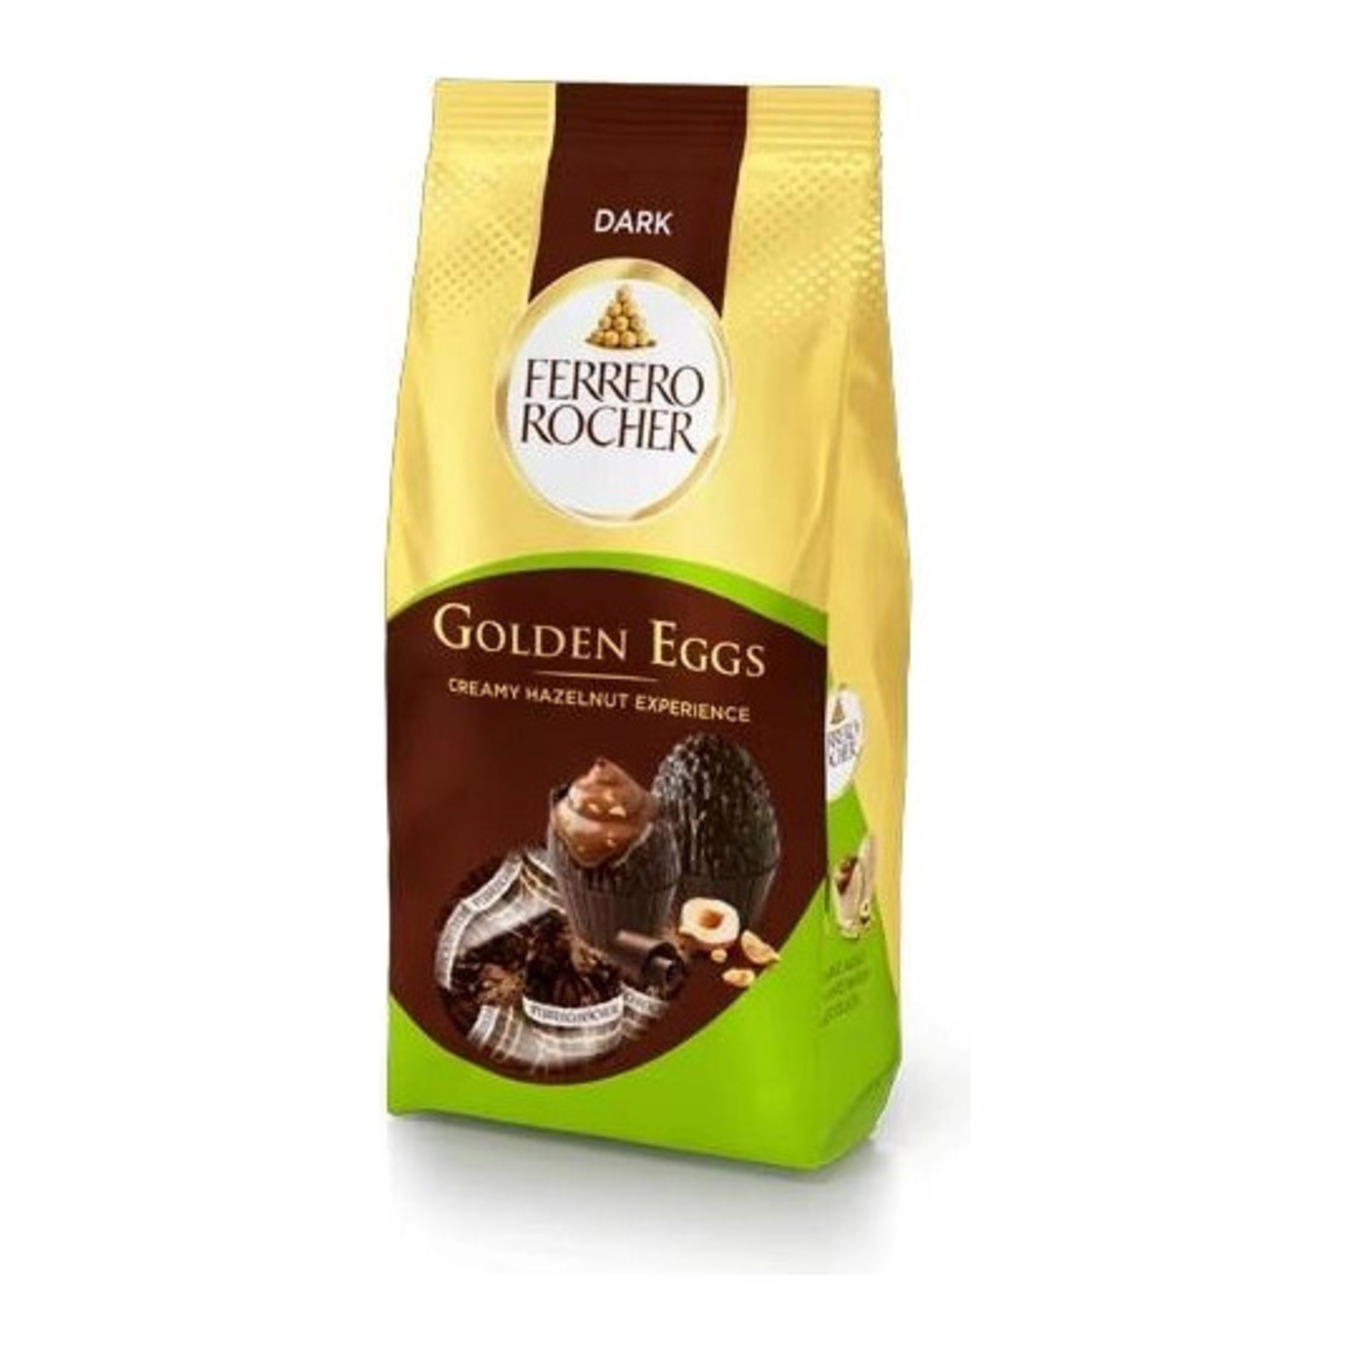 Набор конфет GOLDEN EGGS DARK Ferrero Rocher из темного шоколада 90г